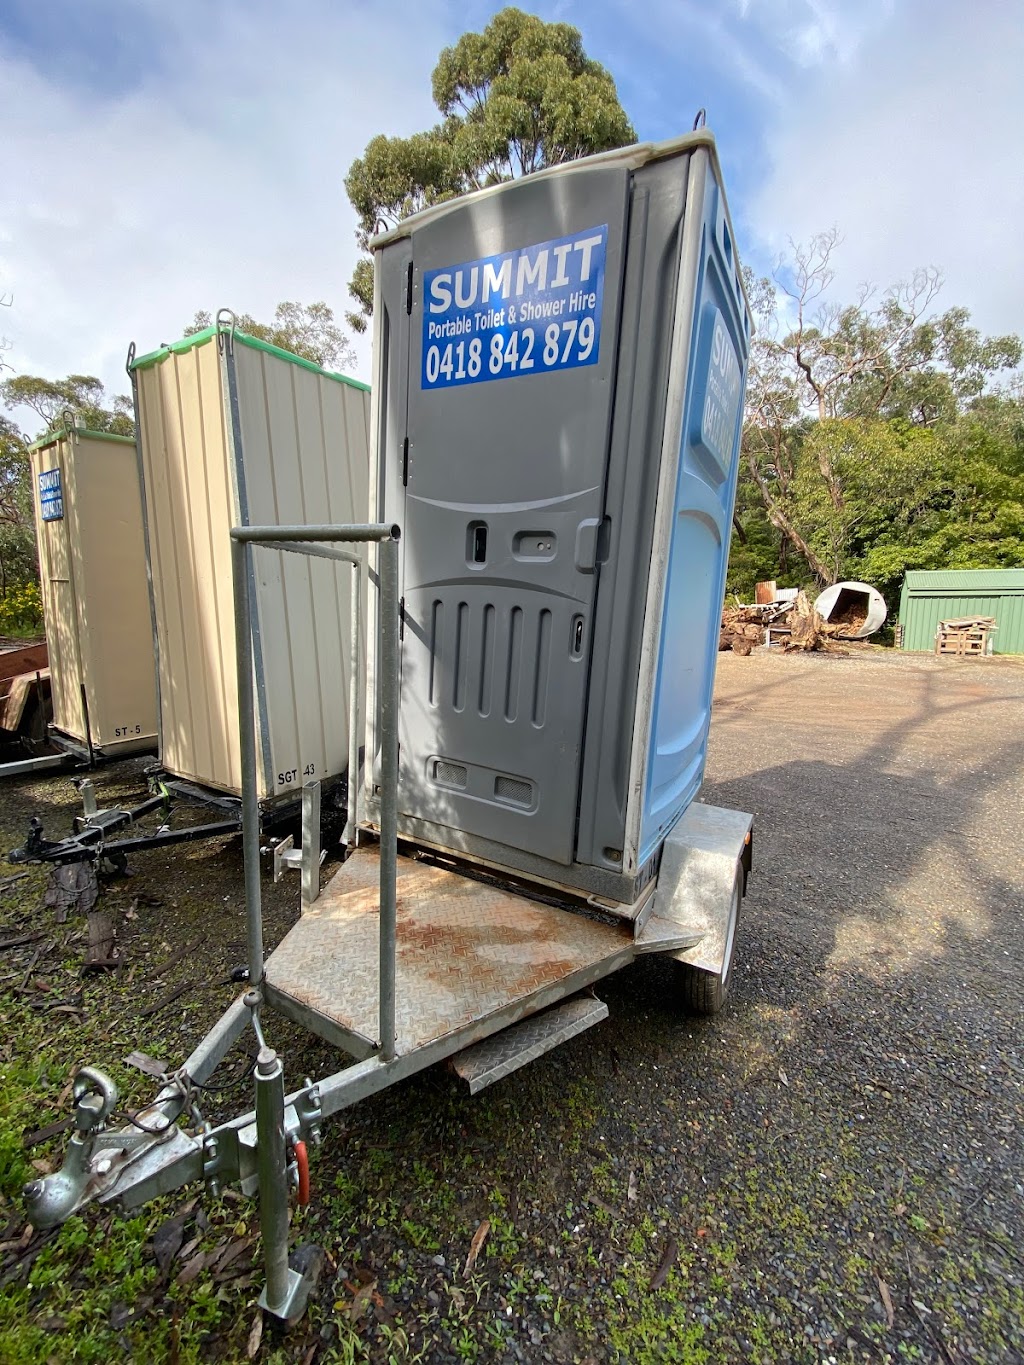 Summit Portable Toilet and Shower Hire | 650 Cherry Gardens Rd, Cherry Gardens SA 5157, Australia | Phone: 0418 842 879